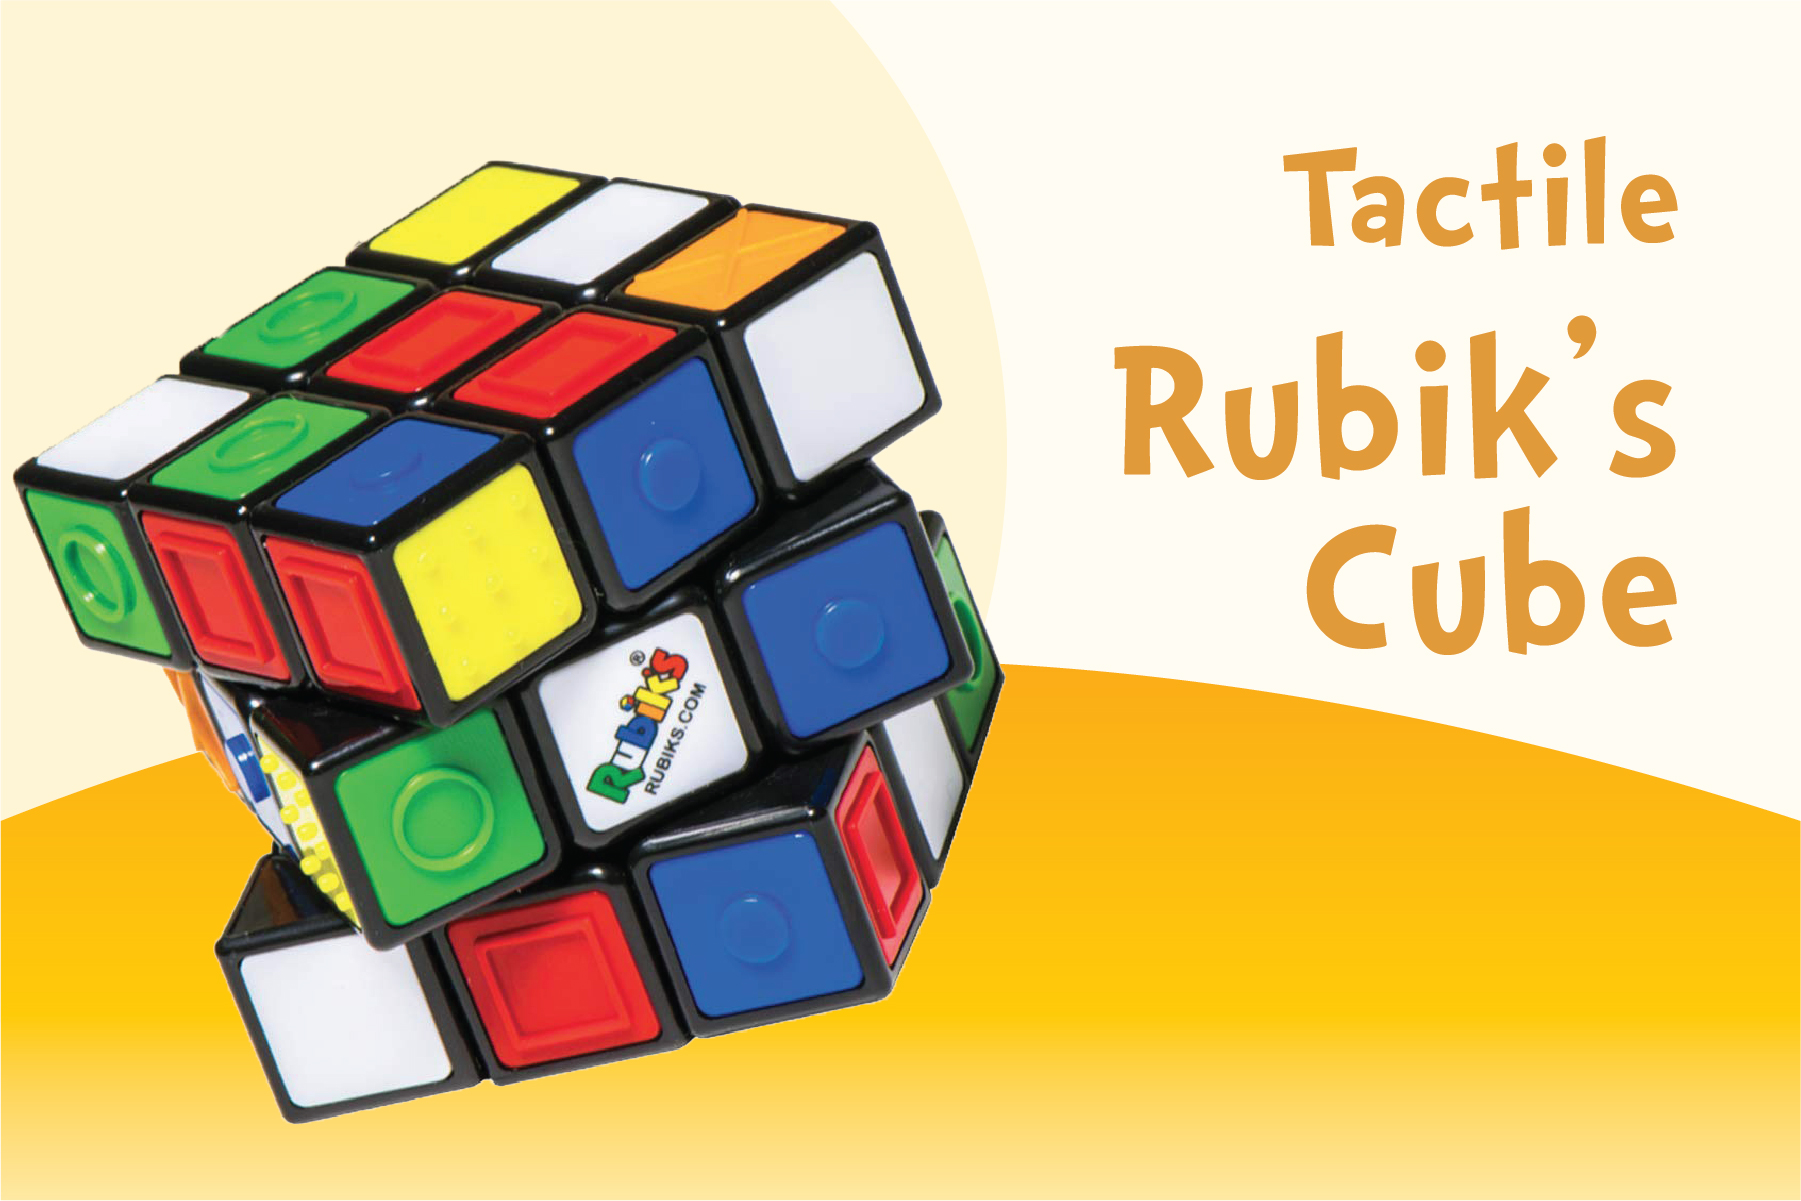 rubik's cube on yellow background